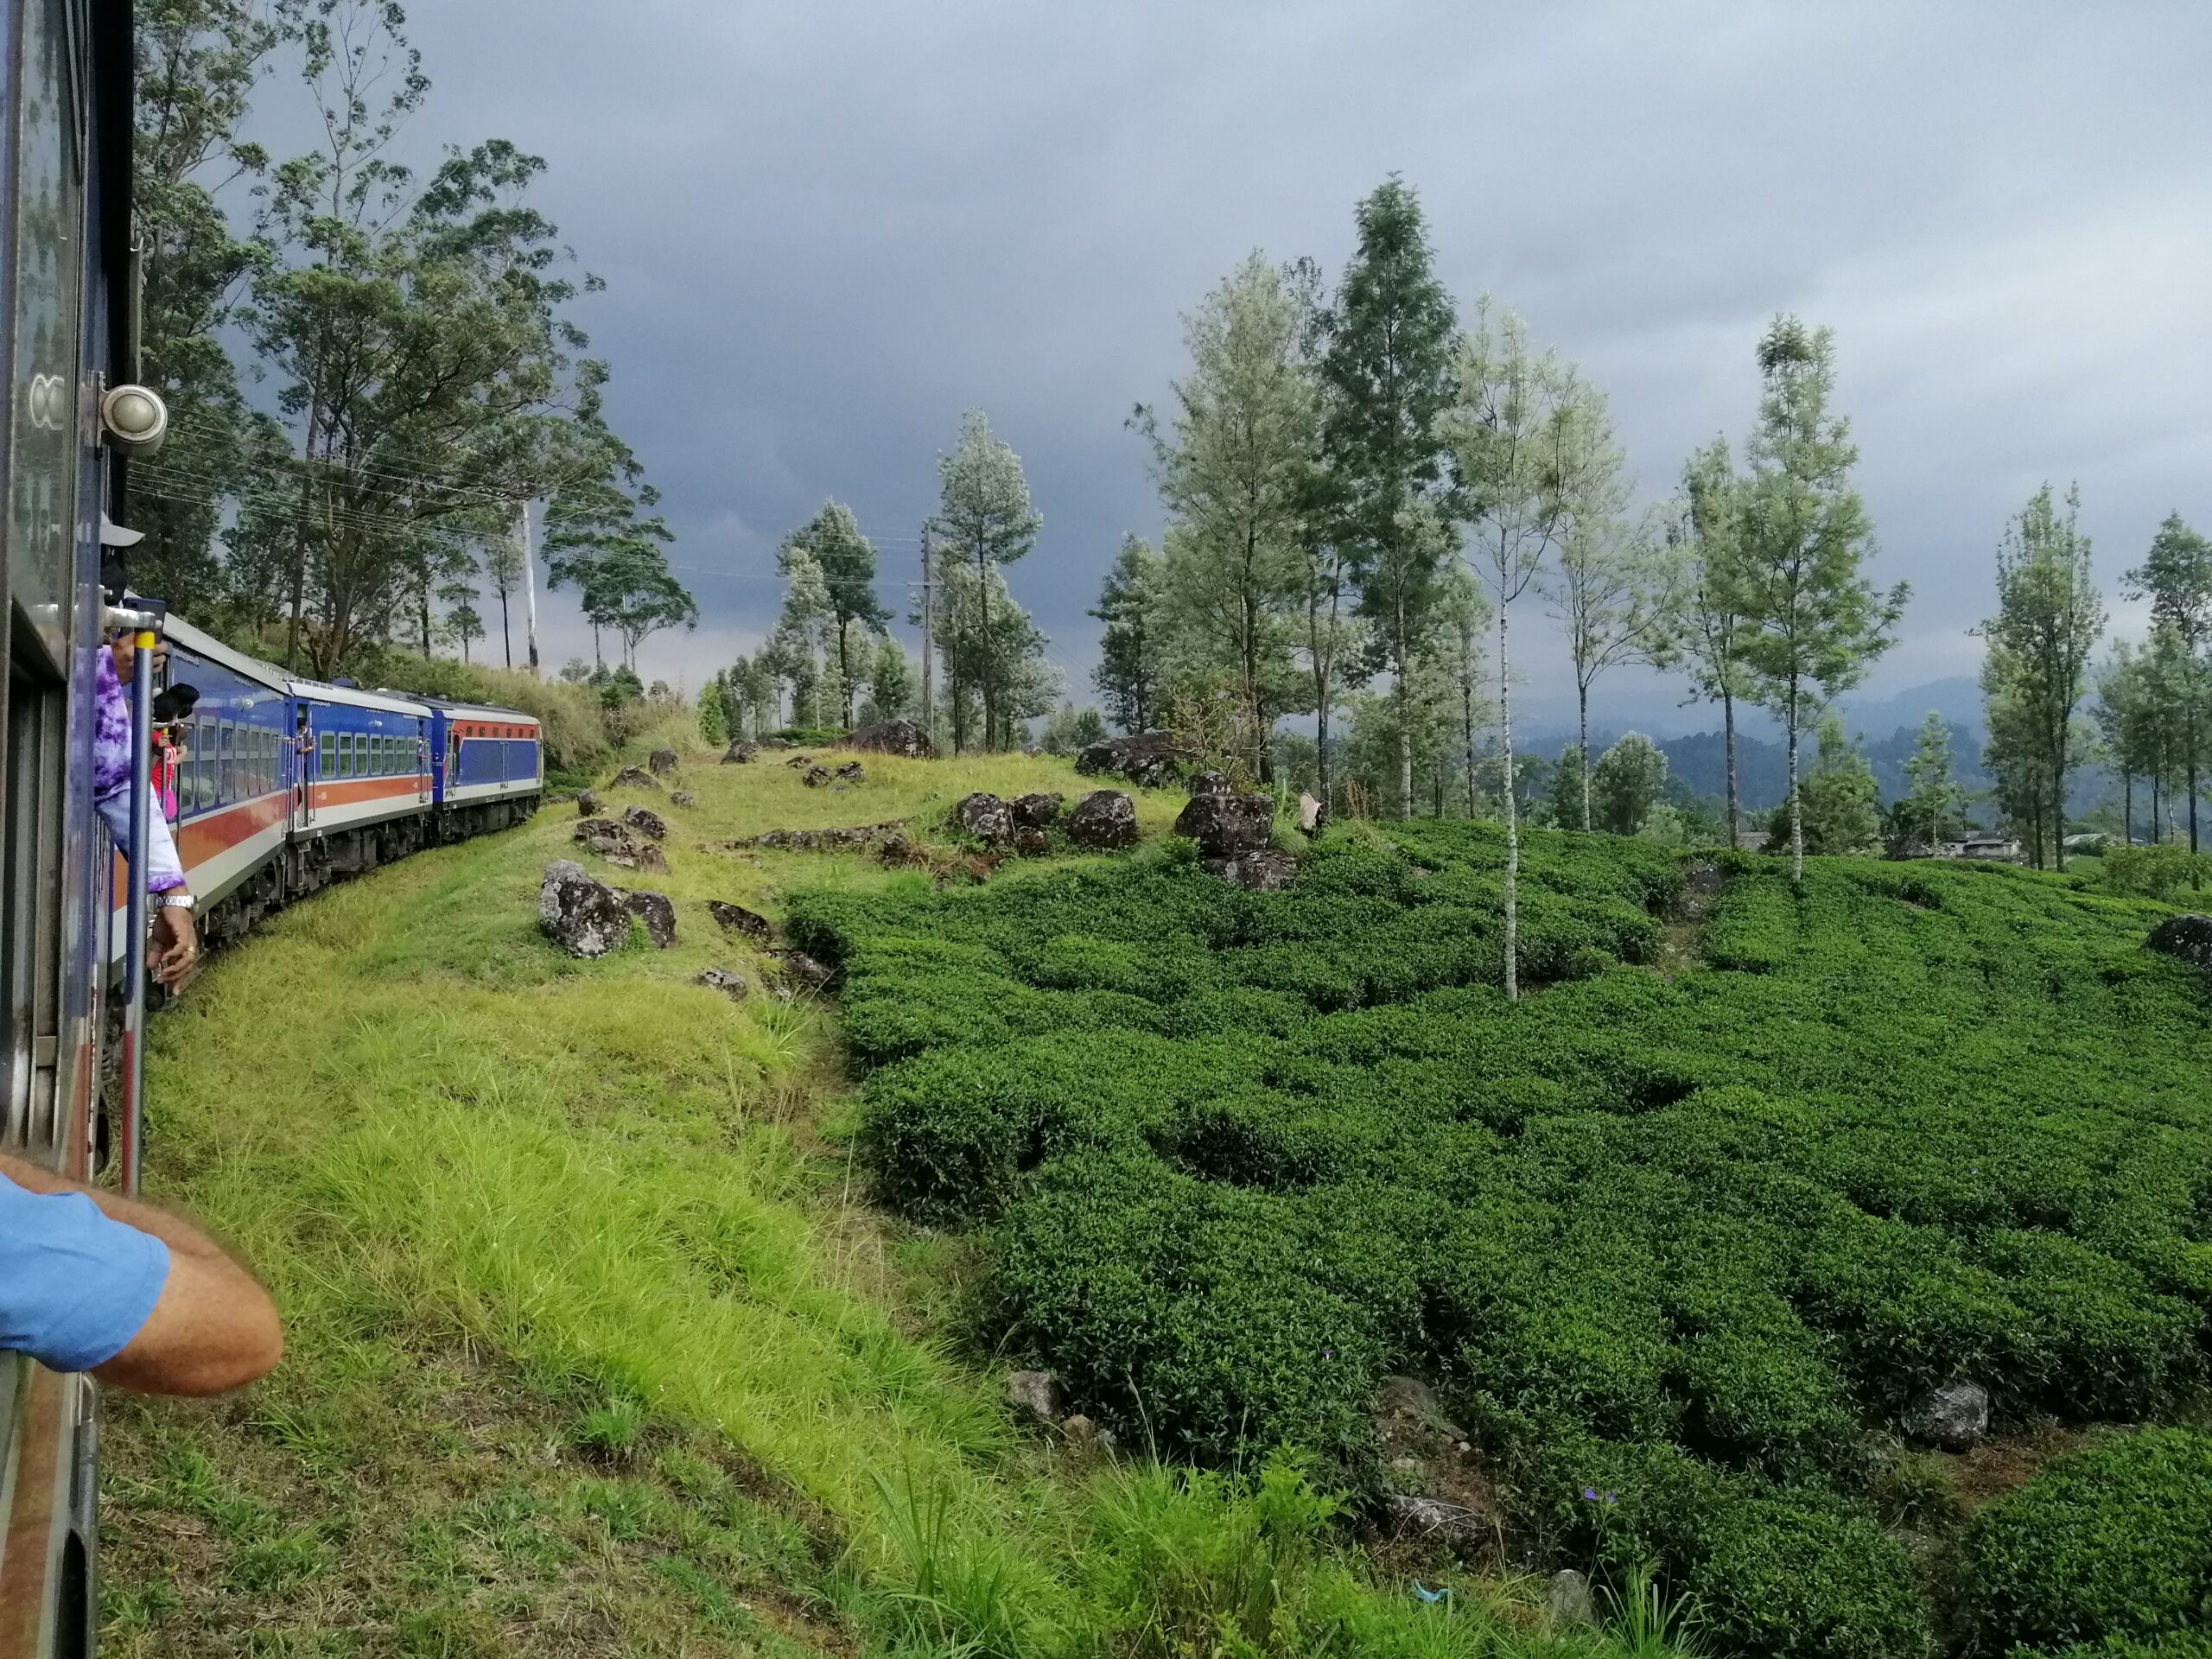 The Ella Odyssey Train Sri Lanka